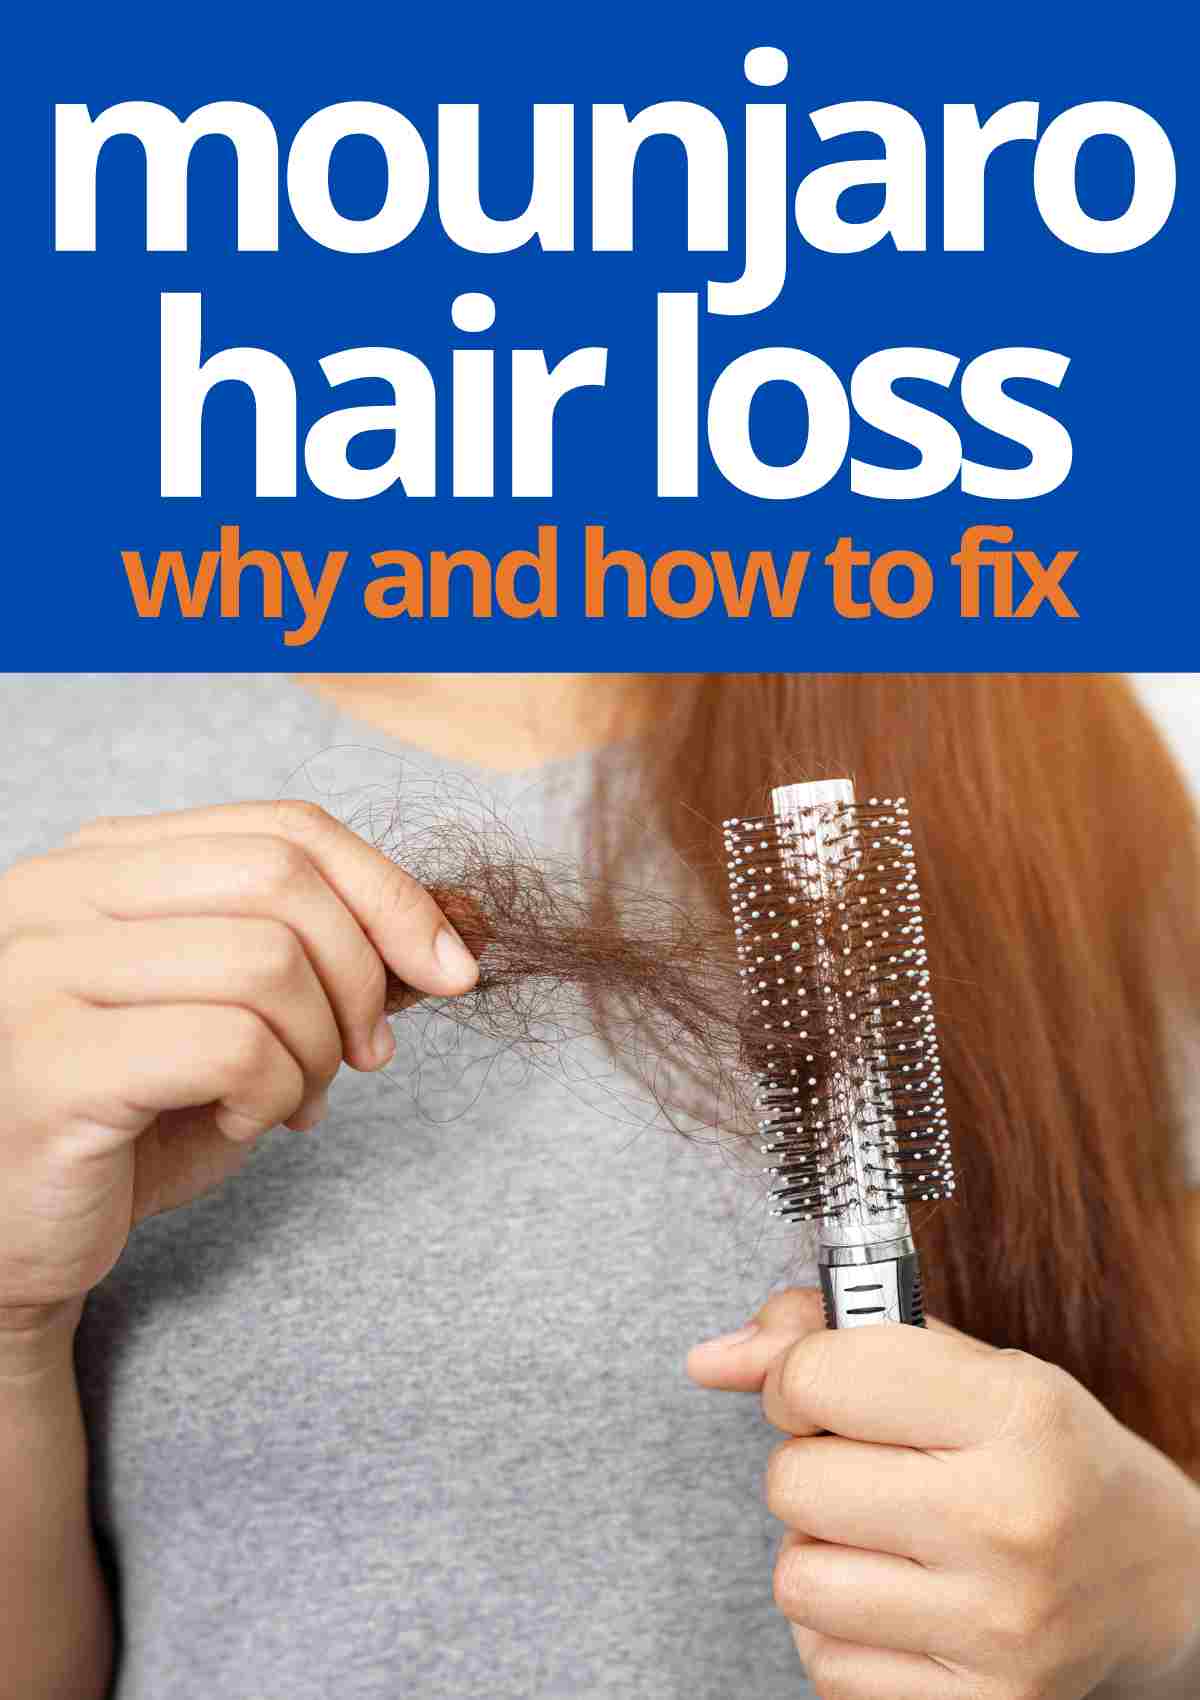 mounjaro hair loss